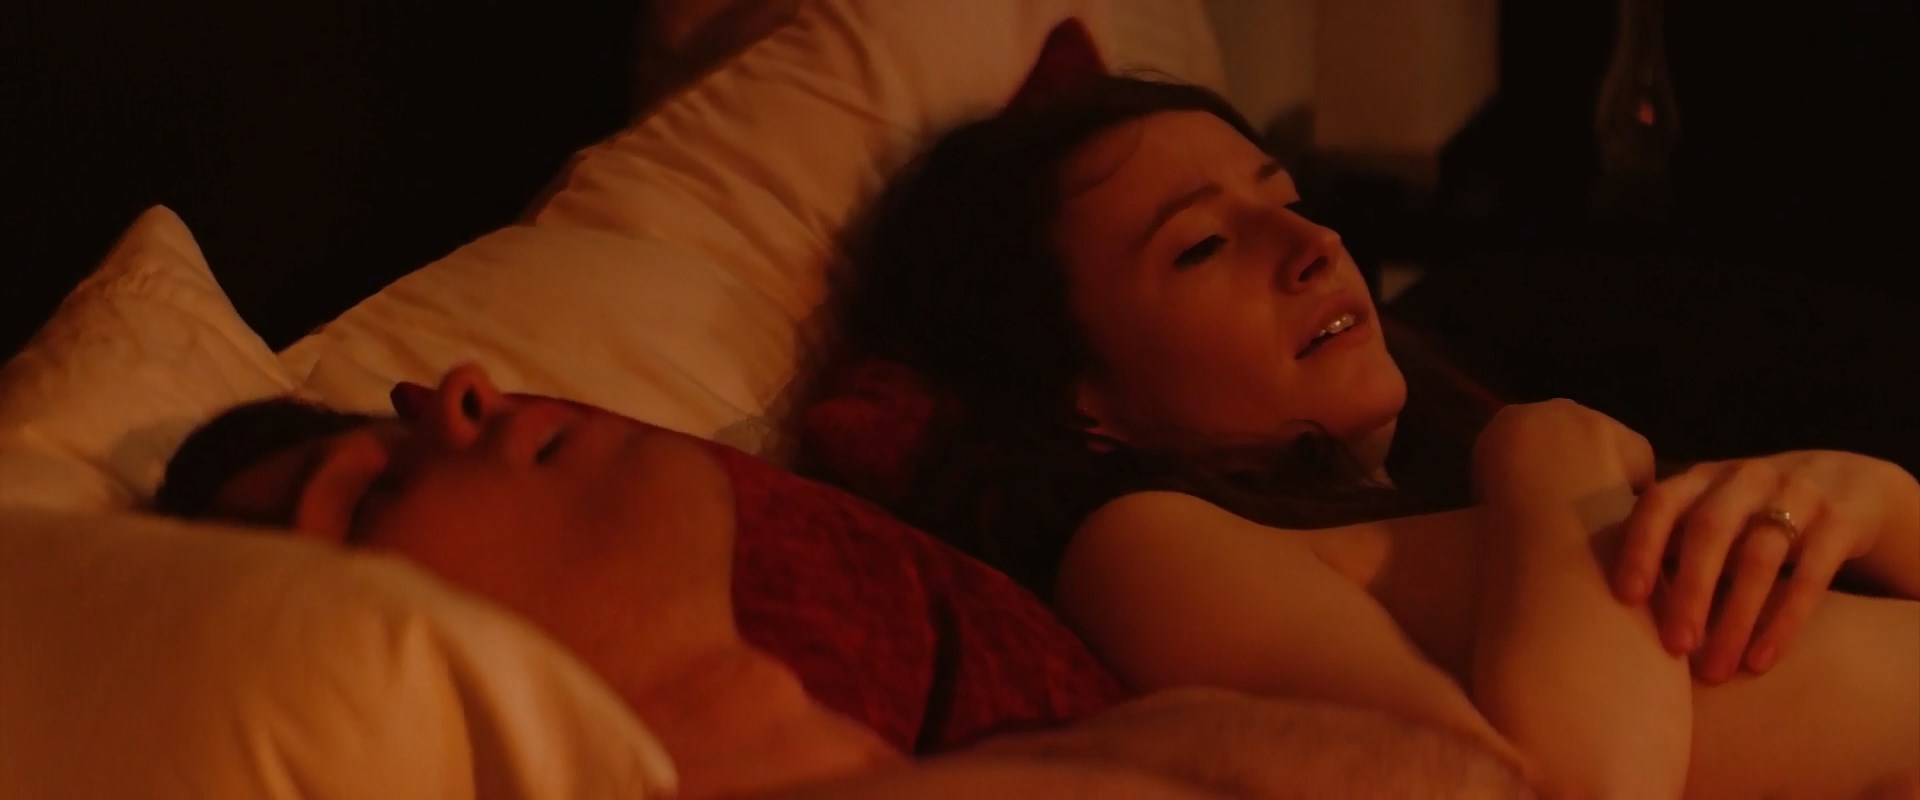 Nude Video Celebs Chloe Carroll Nude The Honeymoon Phase 2019 